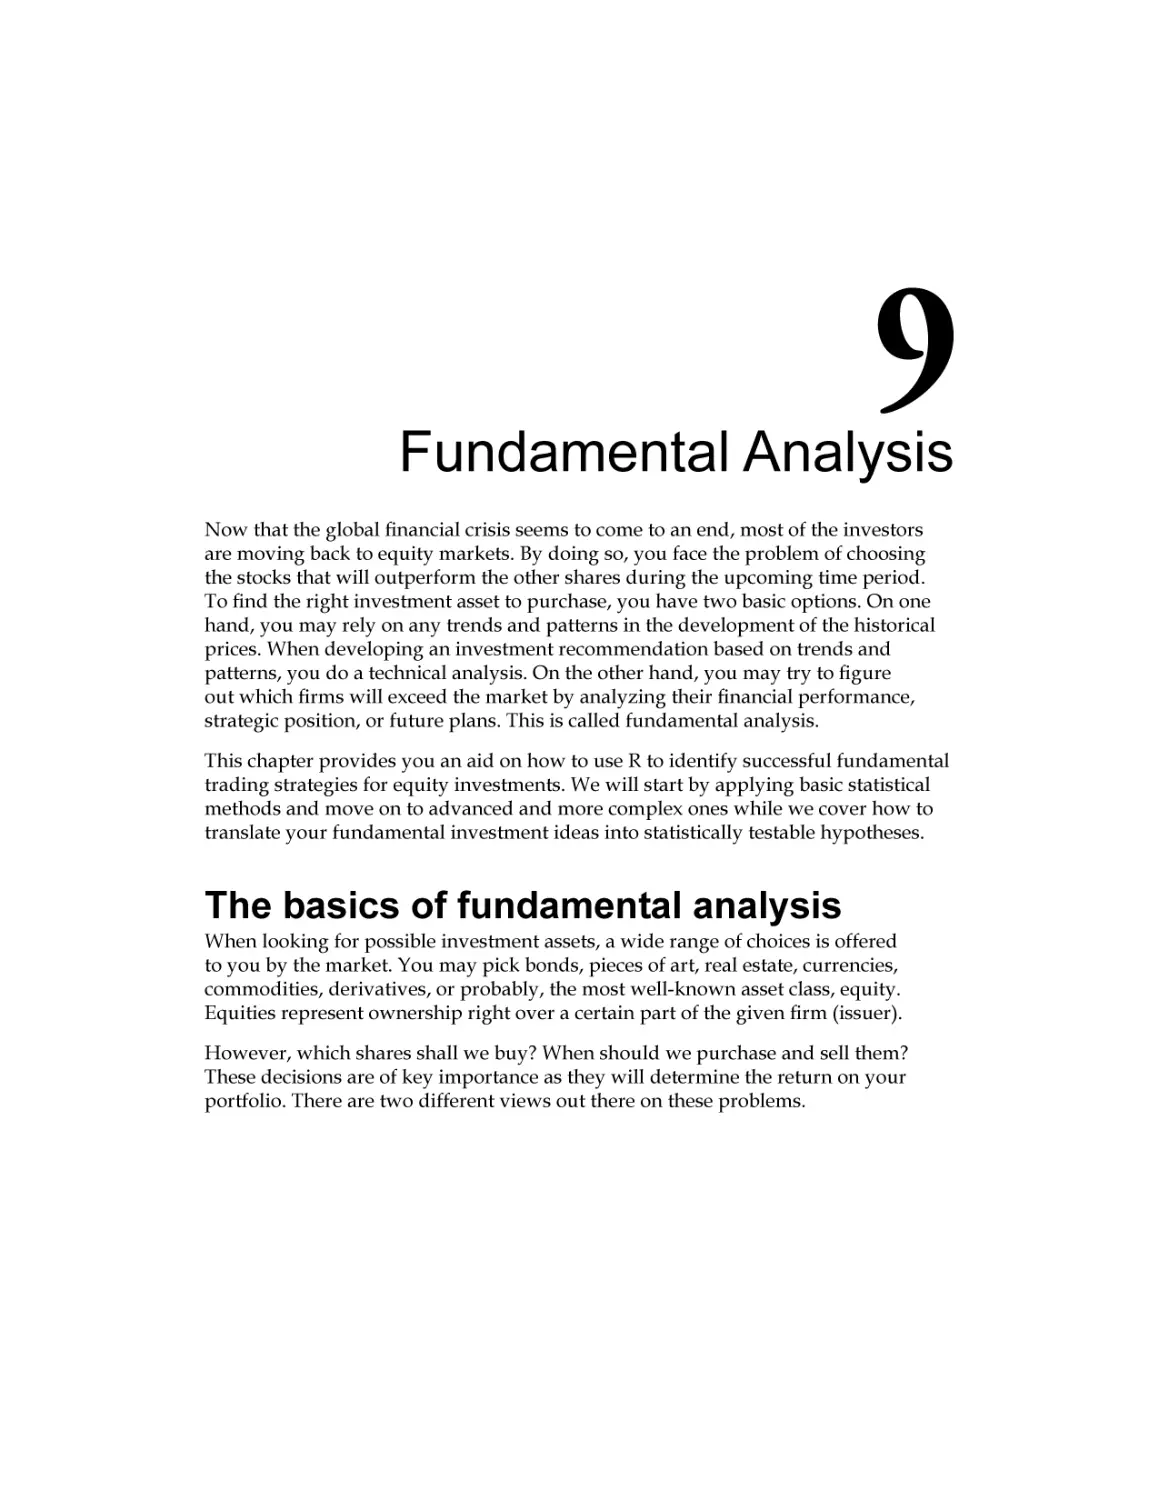 Chapter 9
The Basics of fundamental analysis